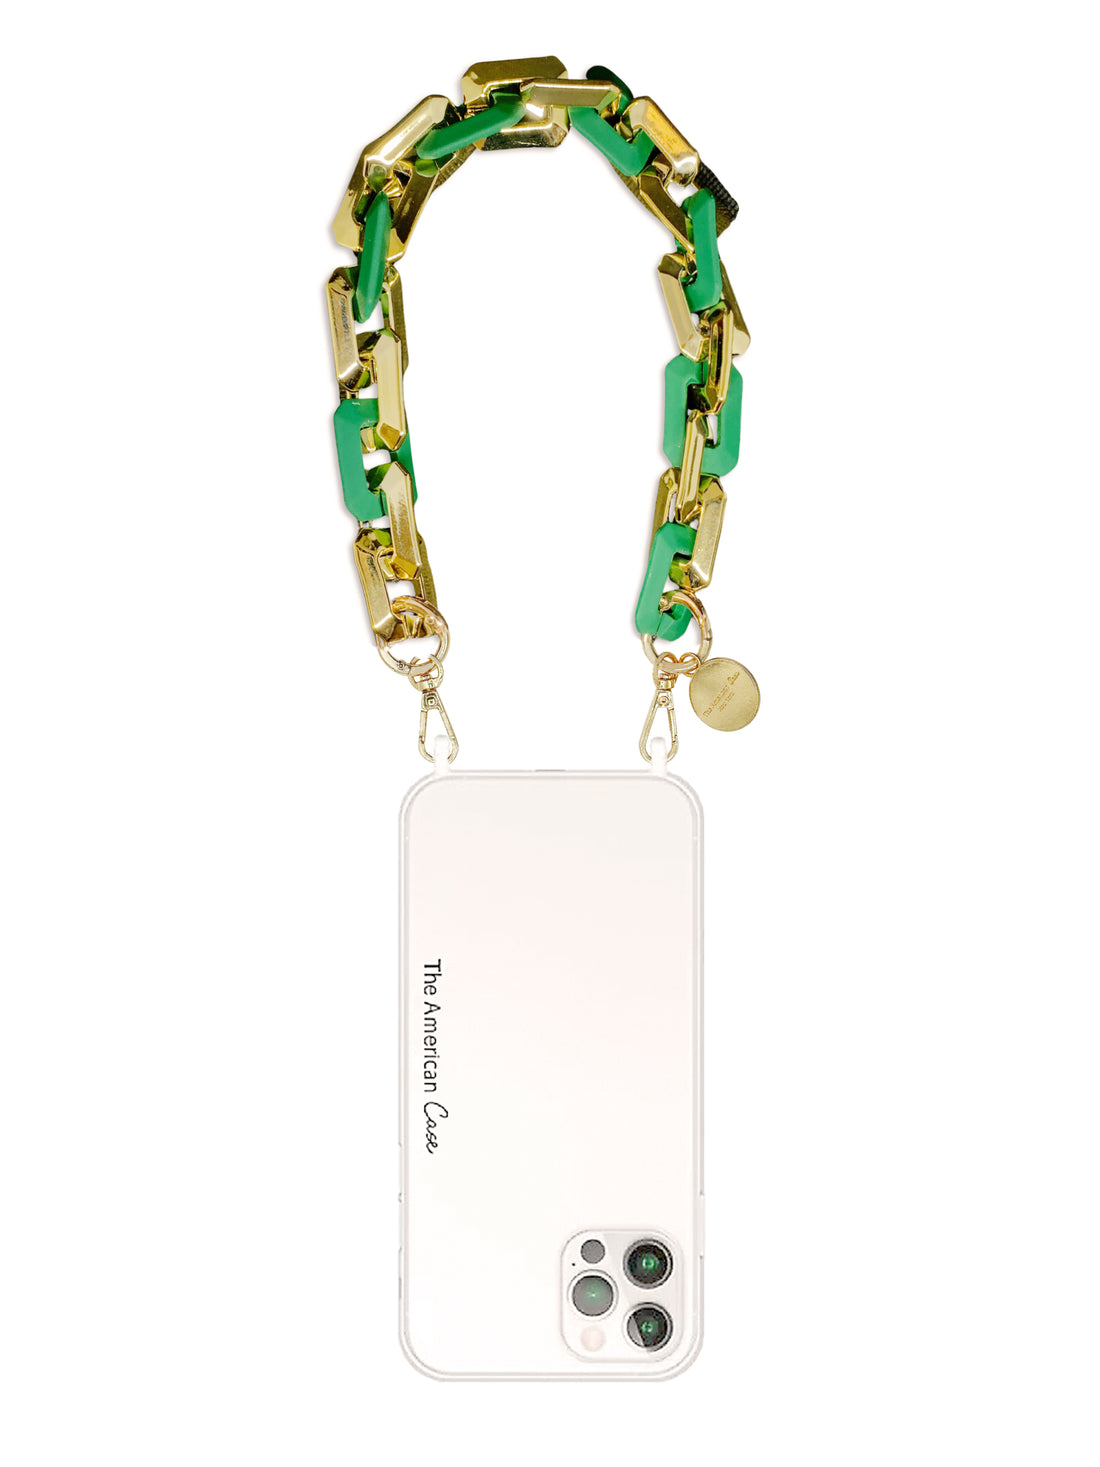 Arabella - Rectangular Links Bracelet Phone Chain with Golden Carabiners